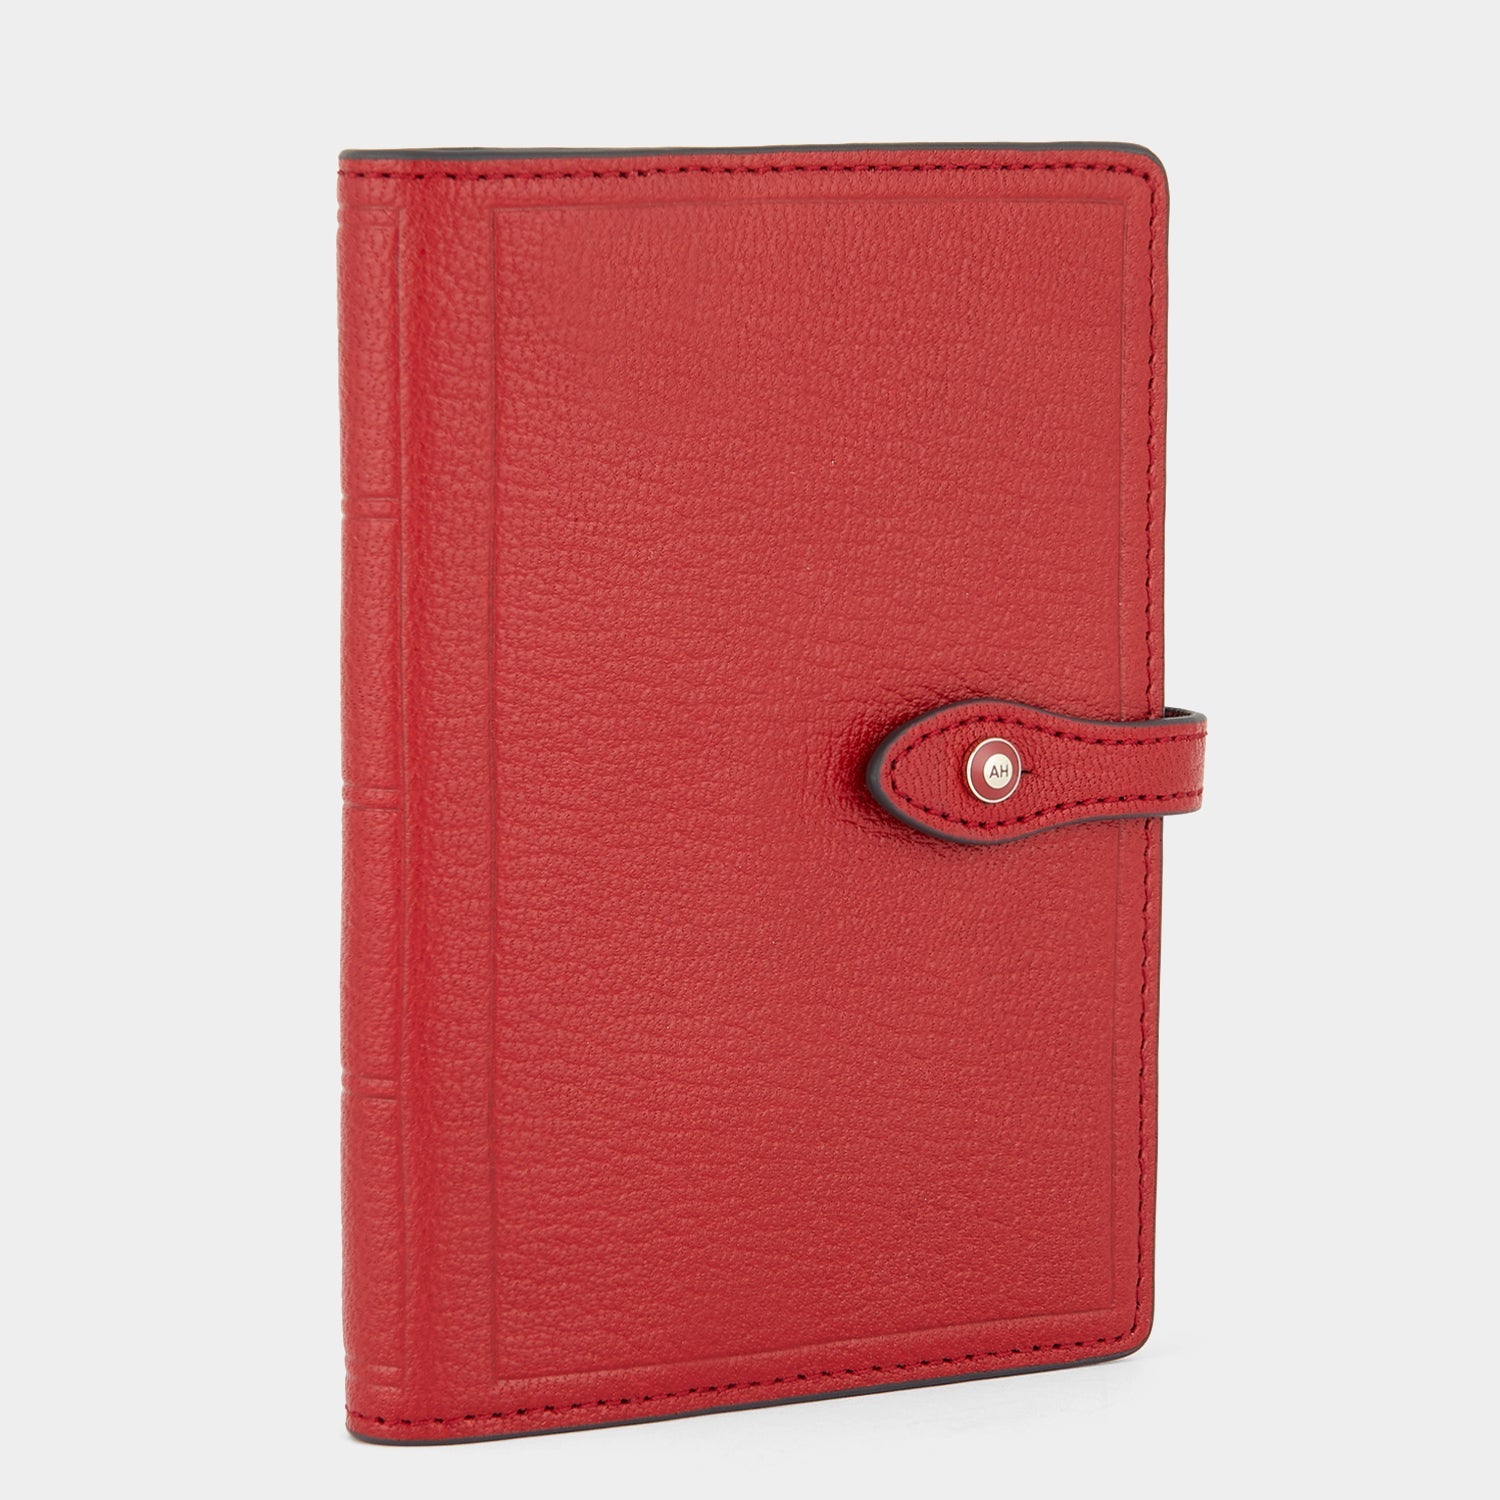 Bespoke Passport Cover -

                  
                    Capra Leather in Red -
                  

                  Anya Hindmarch EU
